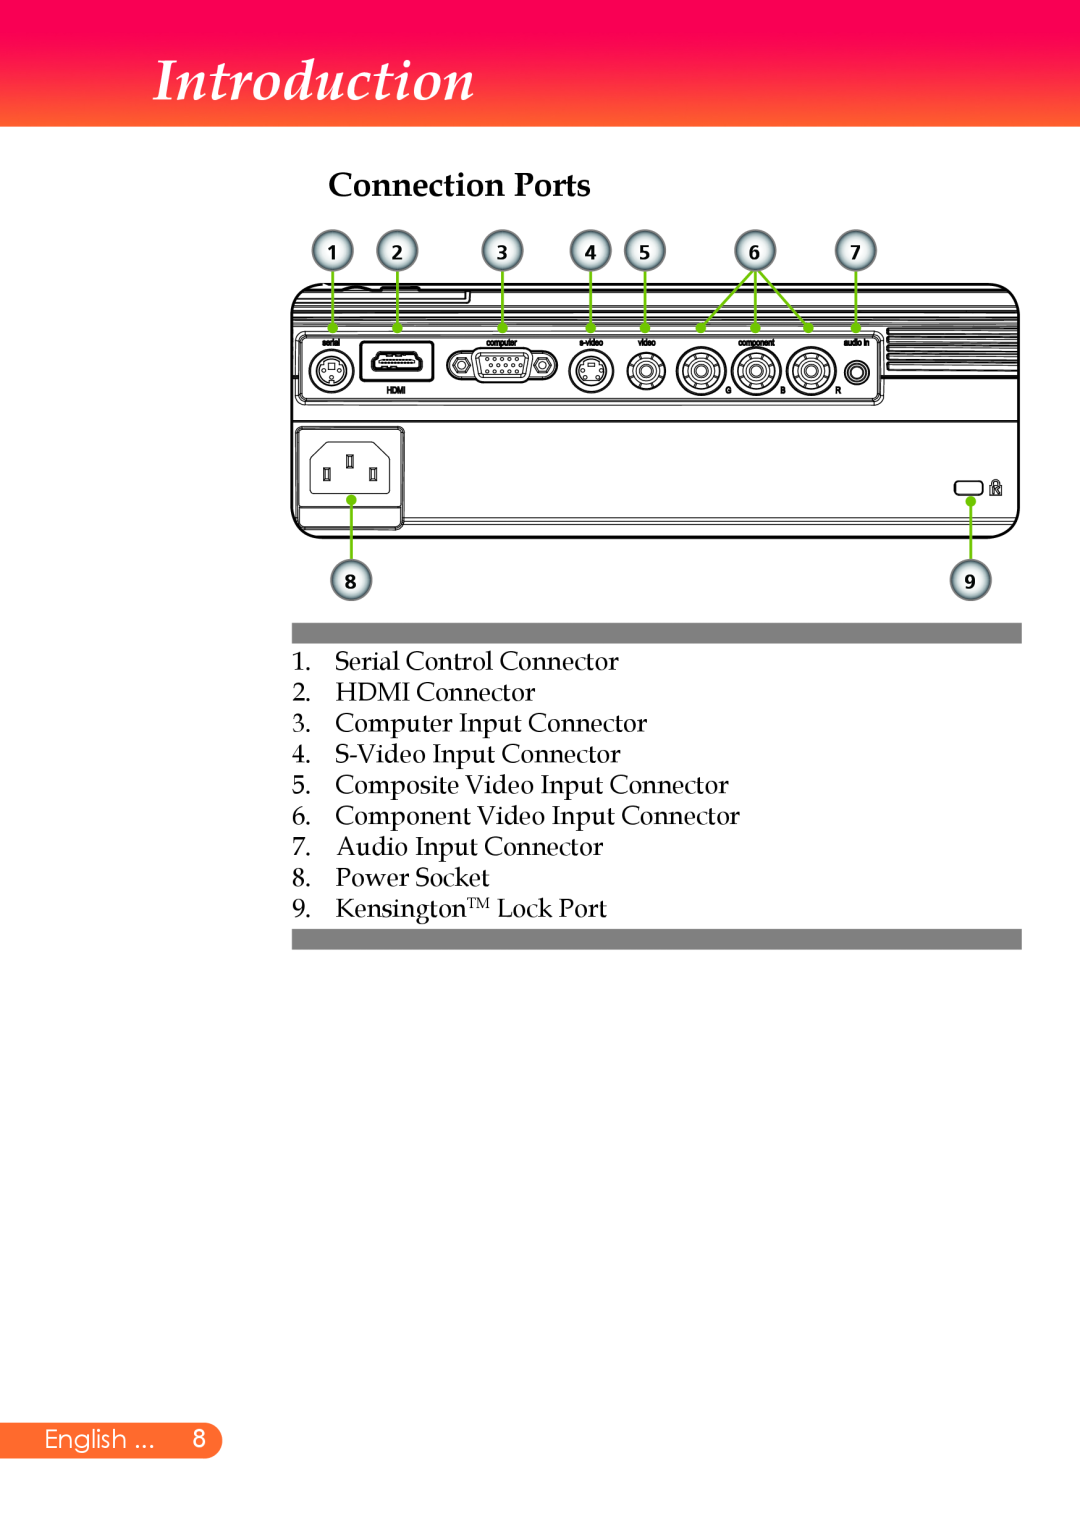 InFocus X9 Connection Ports, Power Socket, Introduction, Serial Control Connector 2. HDMI Connector, Audio Input Connector 